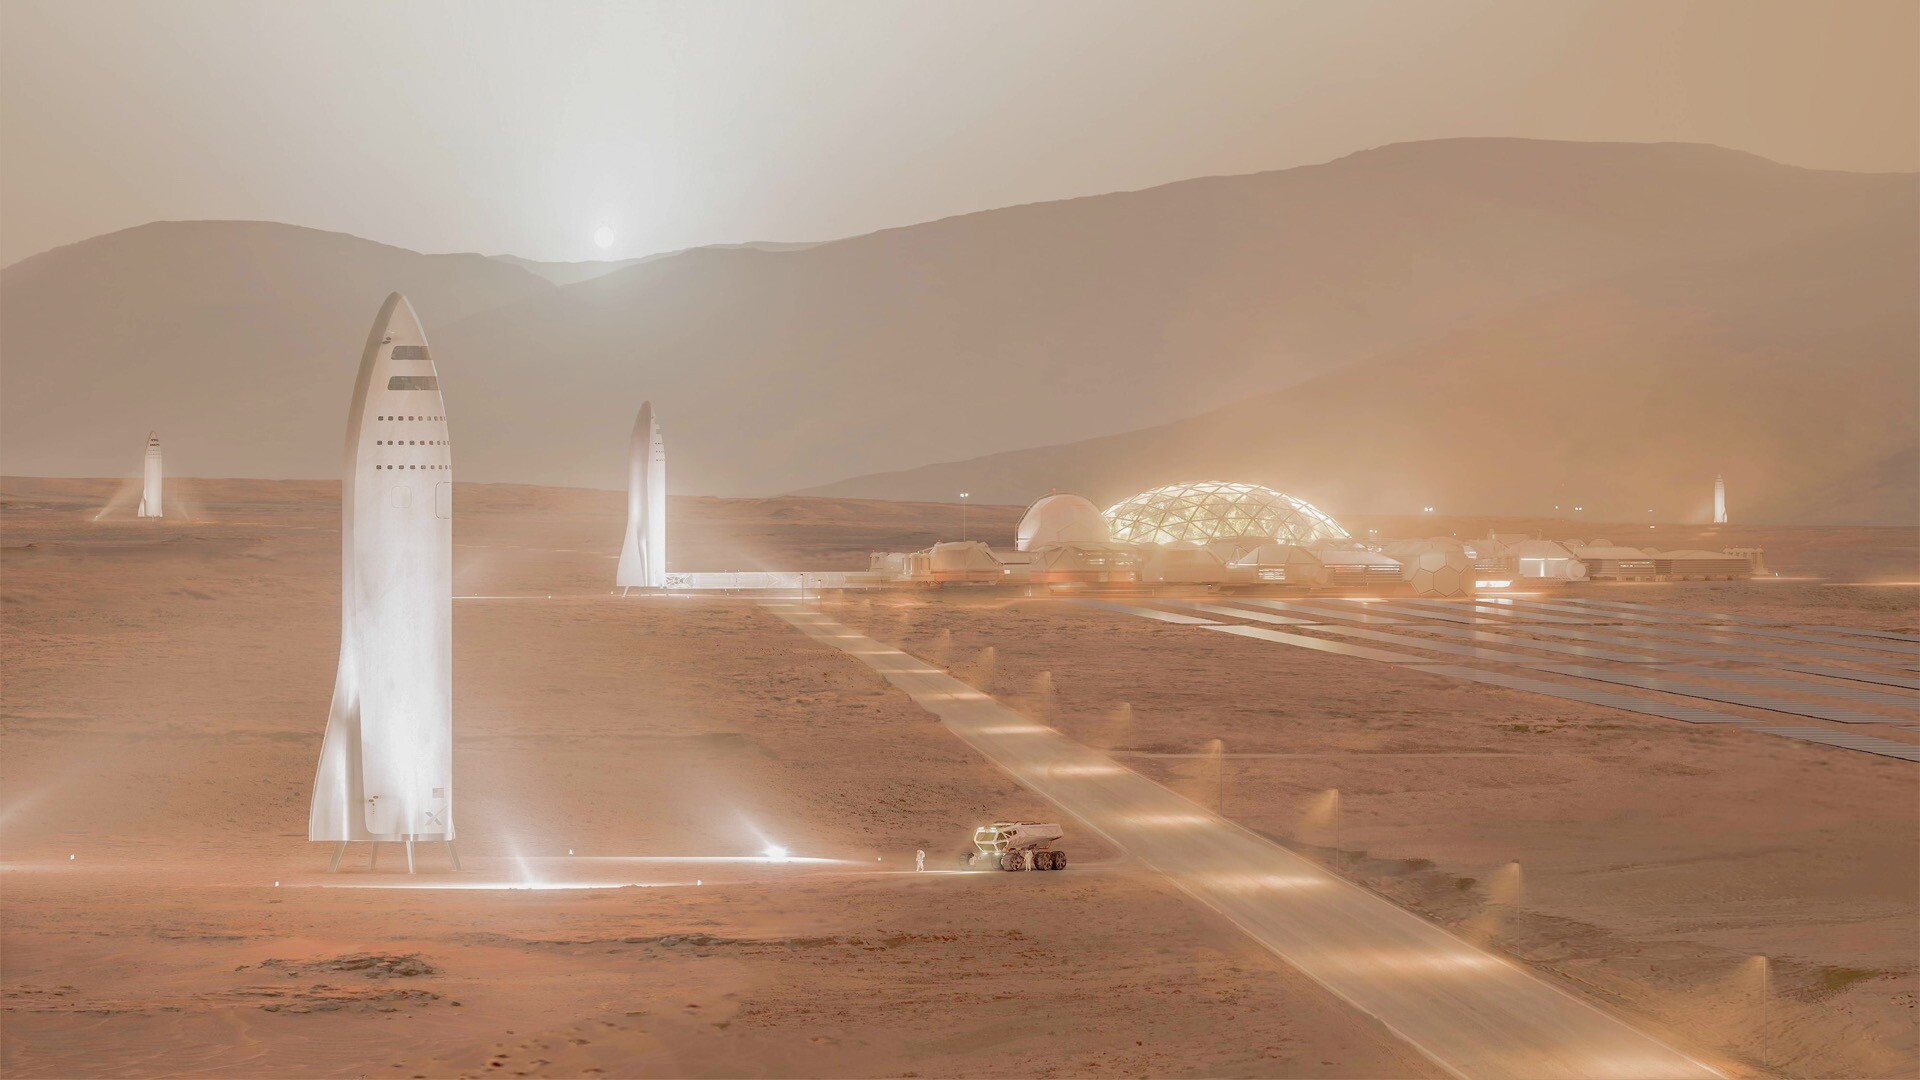 SpaceX Mars Colony创意外星球Mac动态壁纸